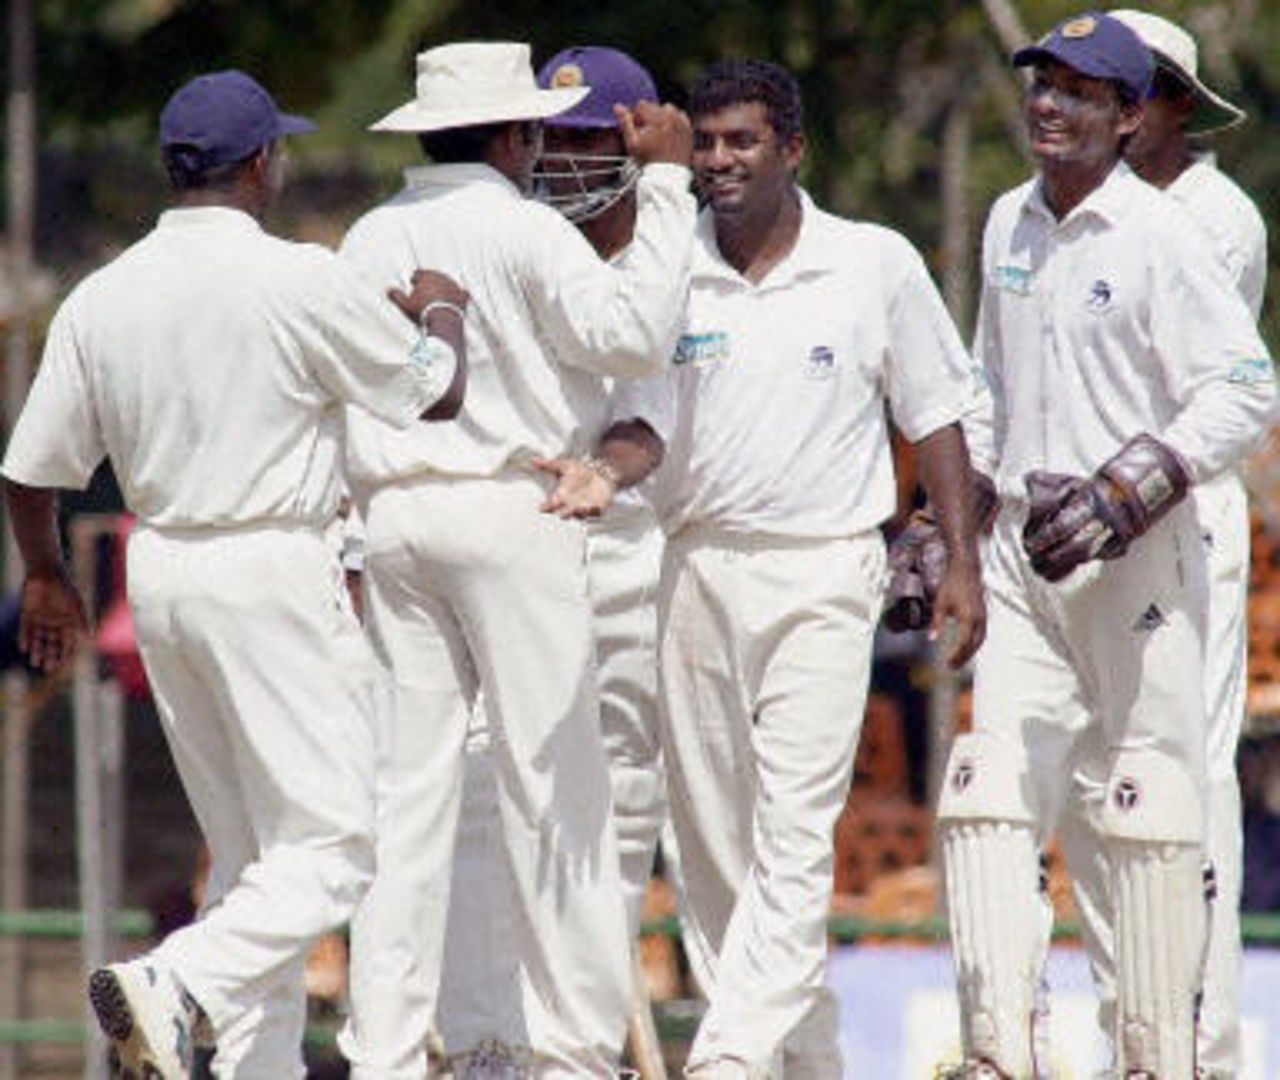 2nd Test: Sri Lanka v Zimbabwe at Asgiriya International Stadium in Kandy, Janashakthi National Test Series Dec 2001-Jan 2002.